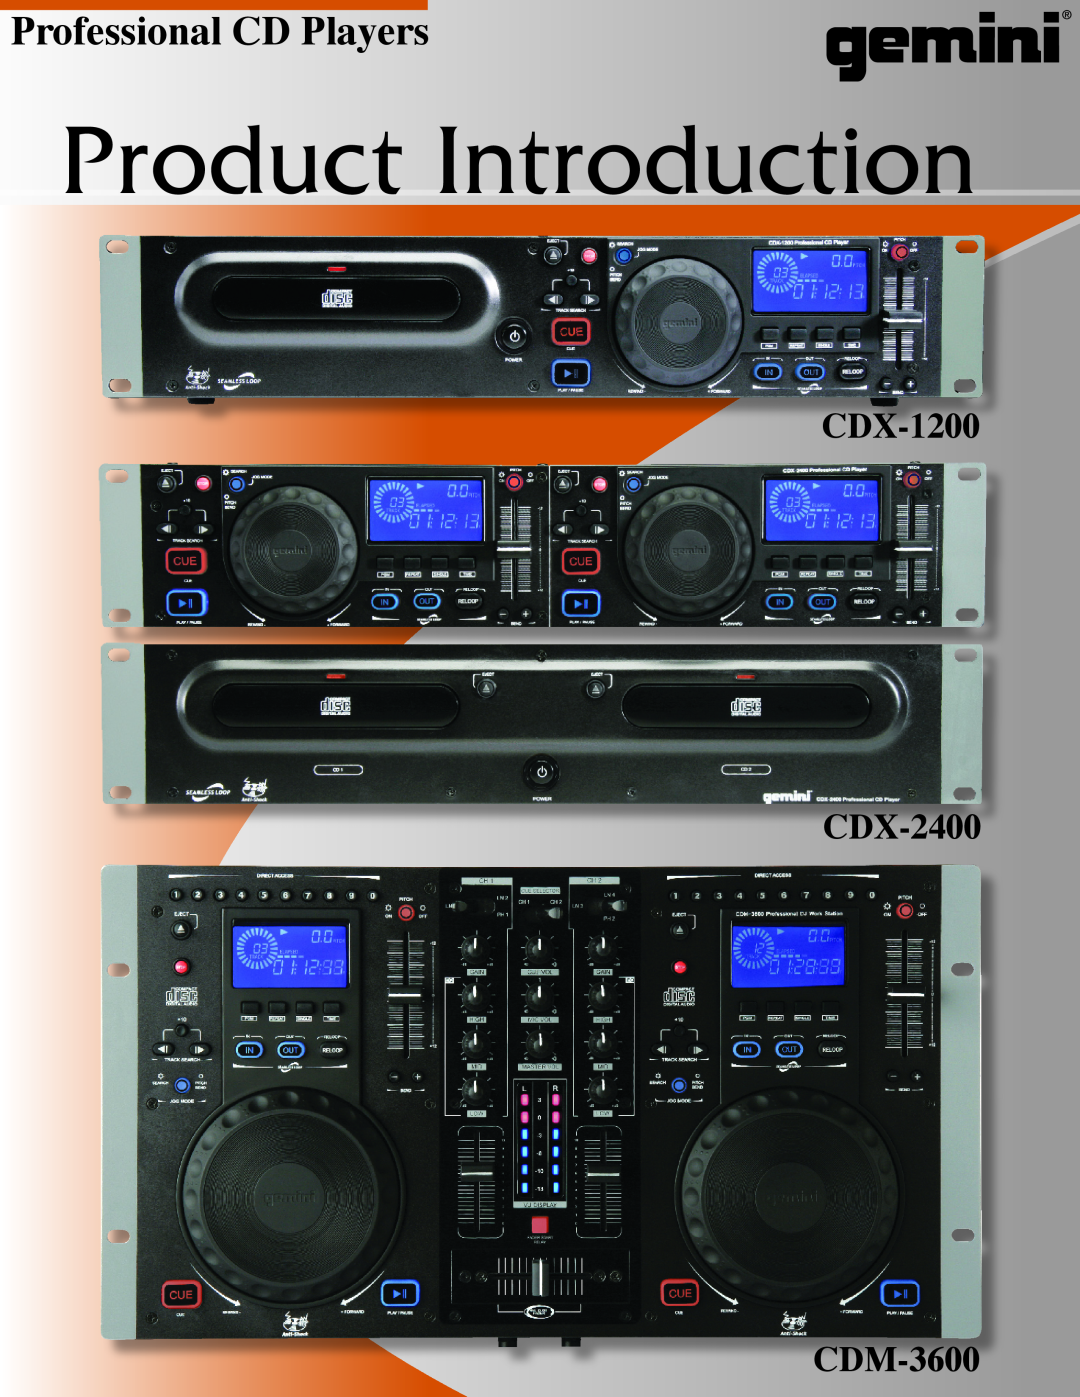 Gemini manual CDX-1200 CDX-2400, CDM-3600, Product Introduction, Professional CD Players 